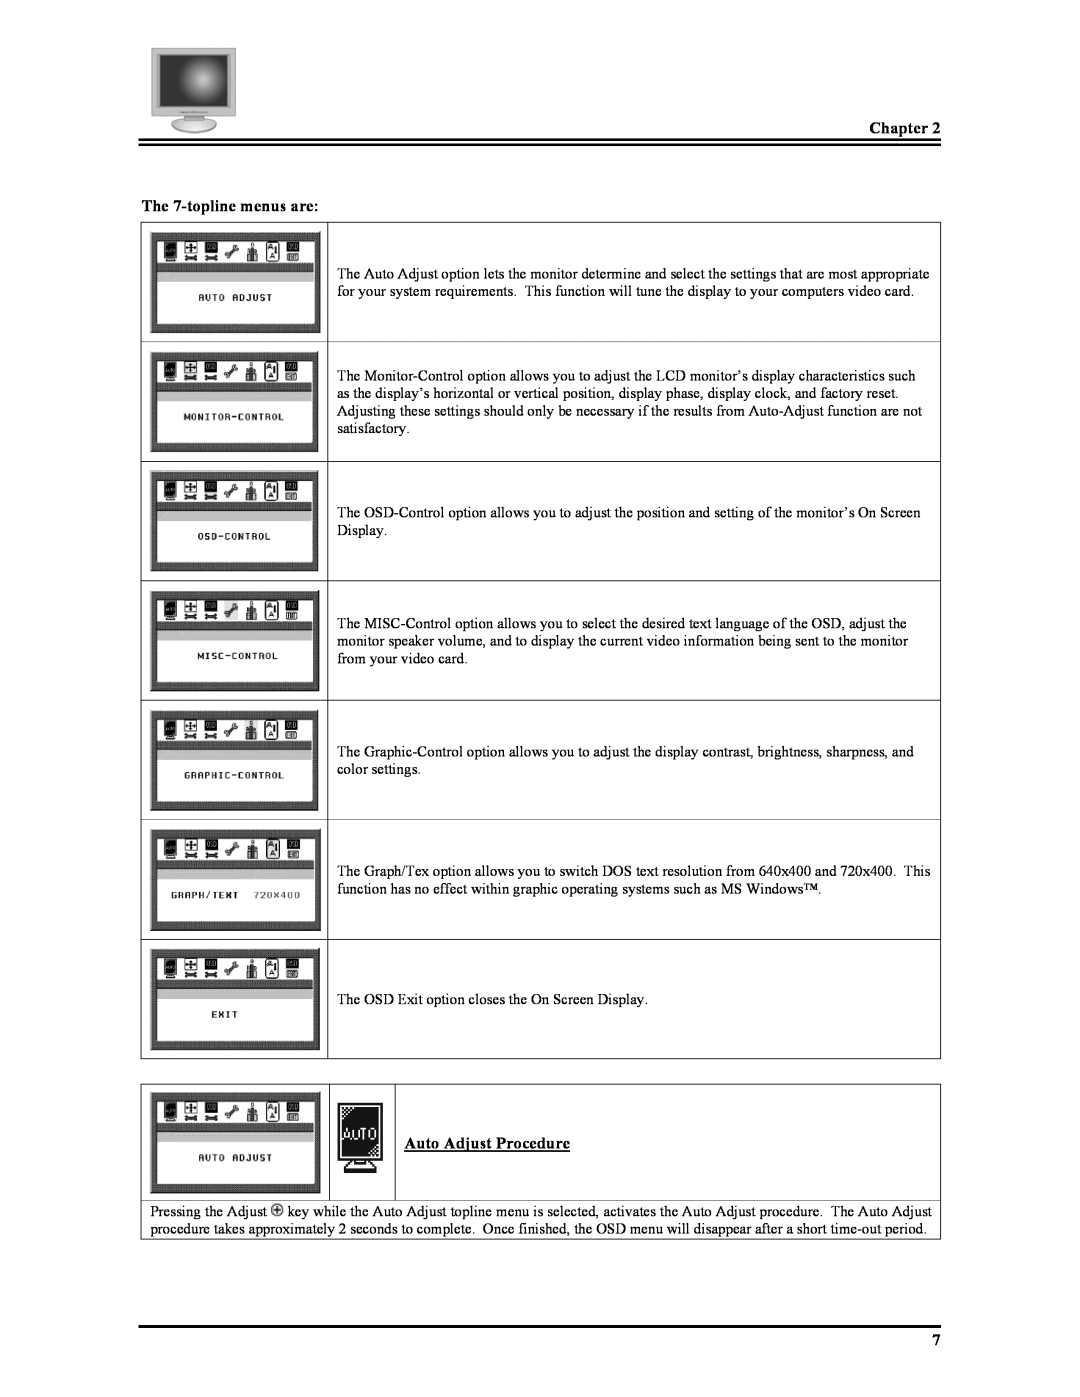 Planar PV150 manual Chapter The 7-topline menus are, Auto Adjust Procedure 